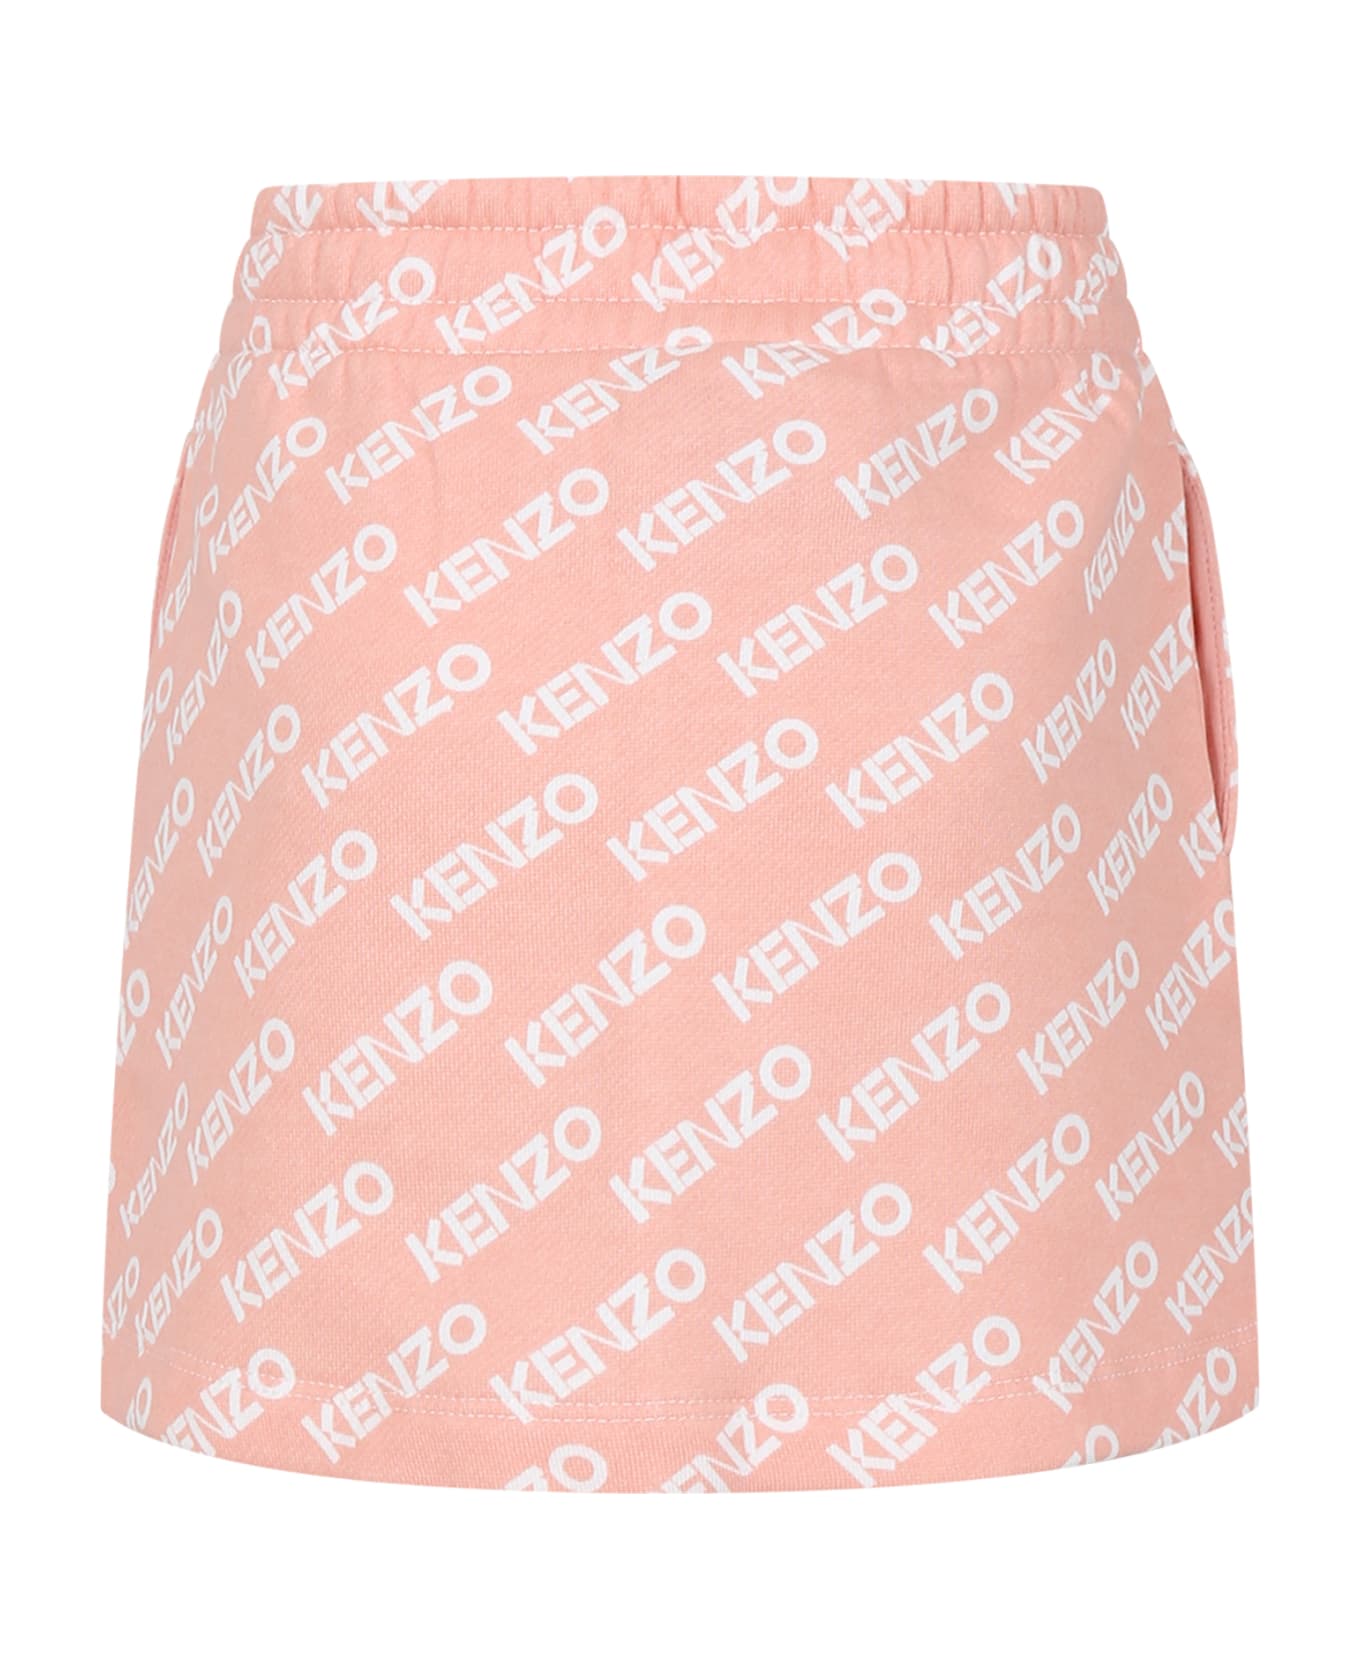 Kenzo Kids Pink Skirt For Girl With Logo - Pink